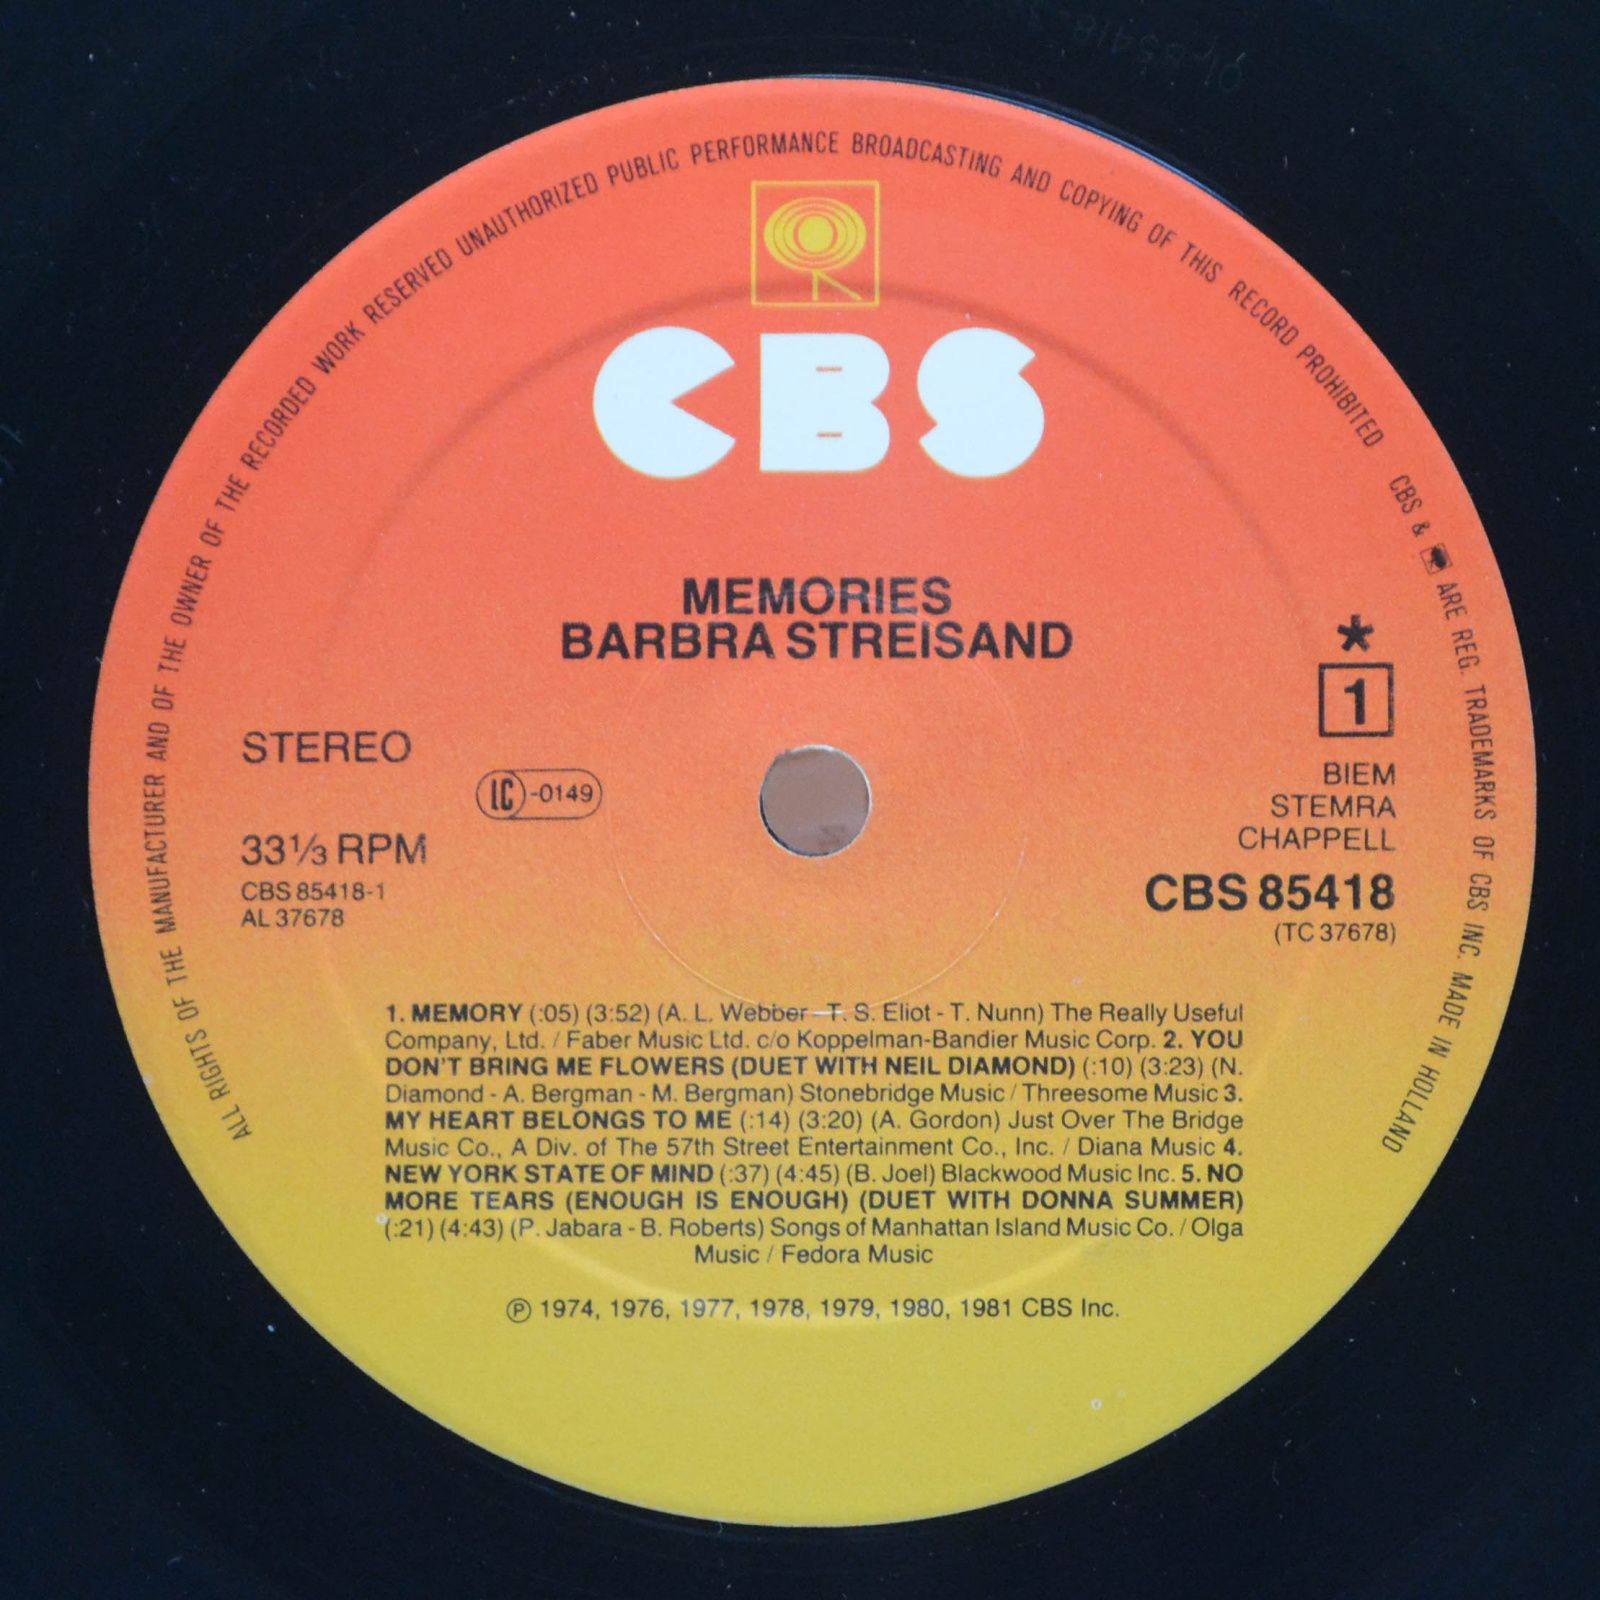 Barbra Streisand — Memories, 1981